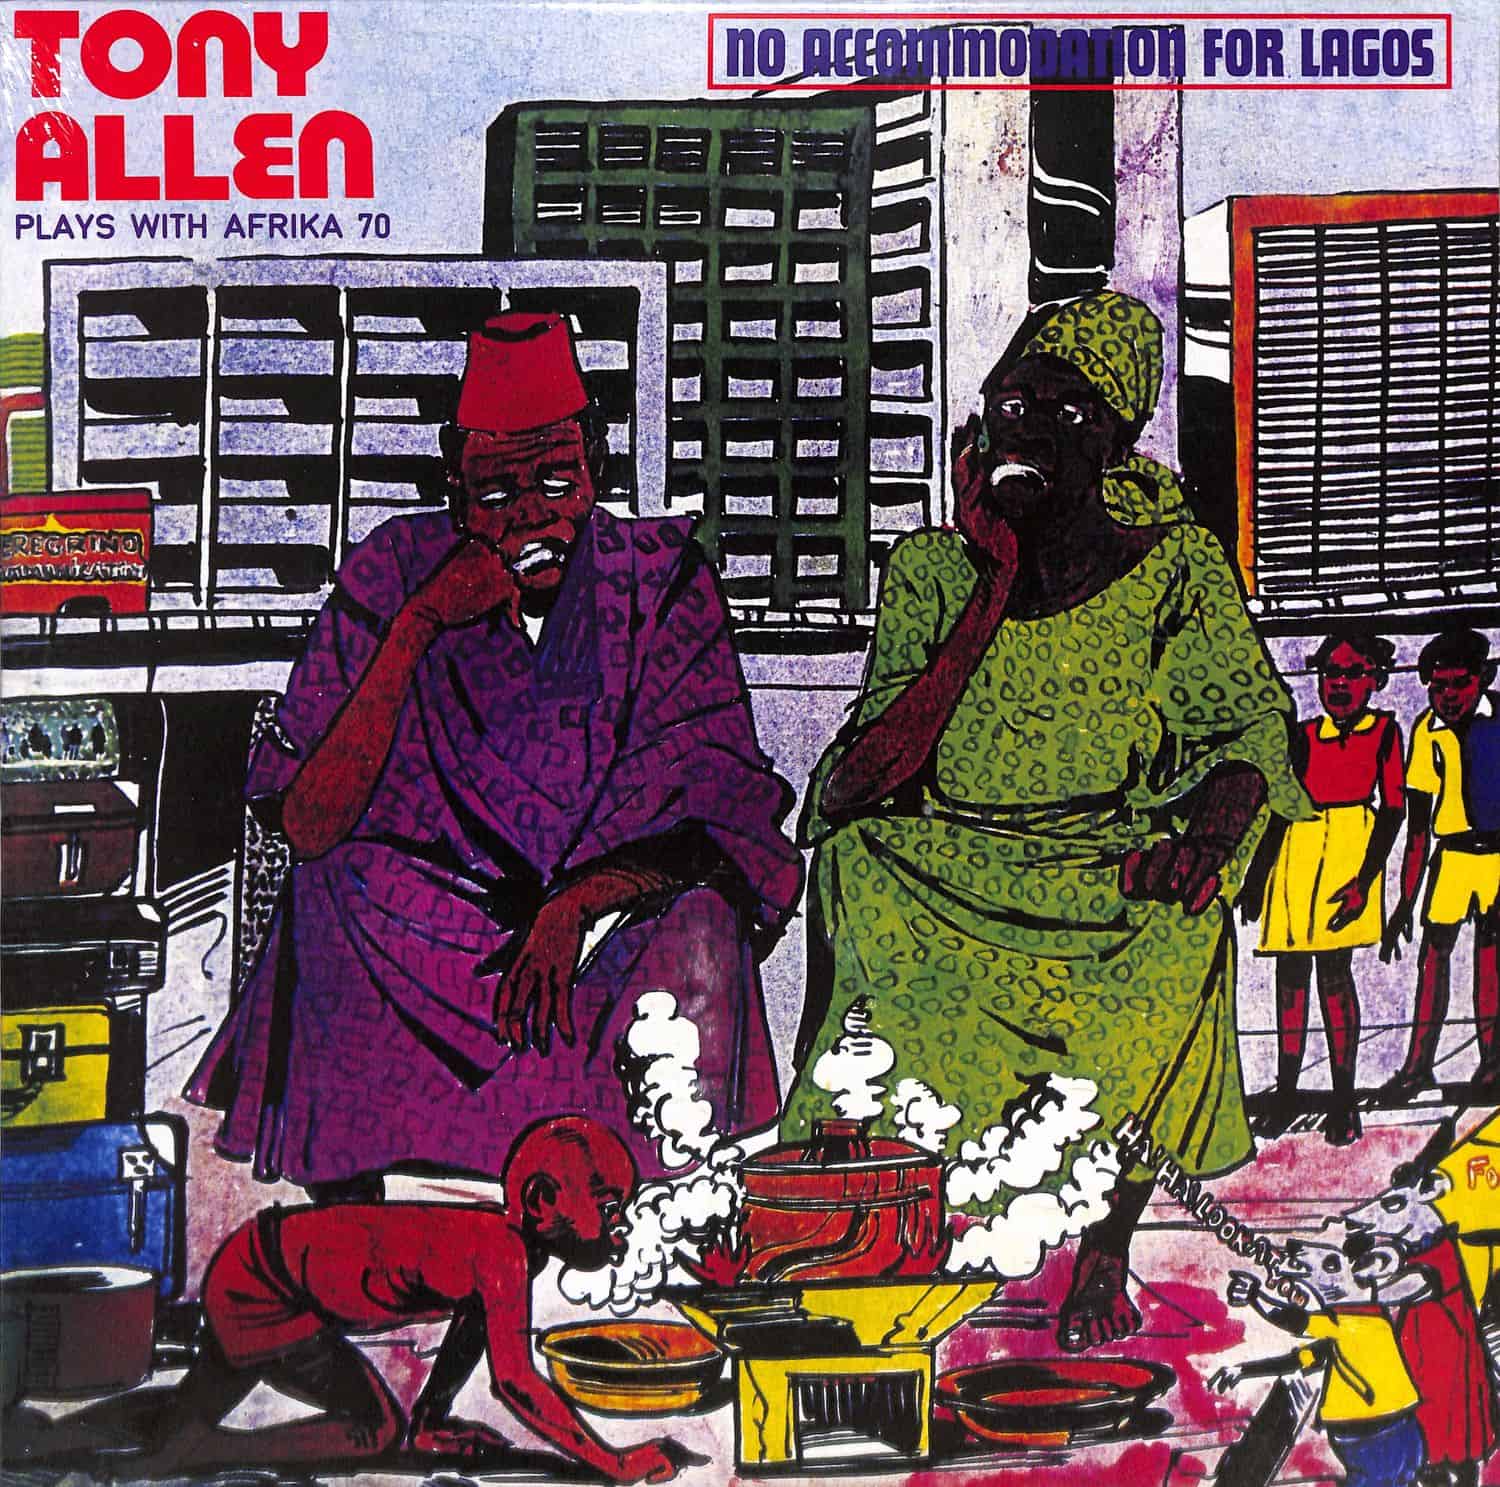 Tony Allen & Africa 70 - NO ACCOMODATION FOR LAGOS 